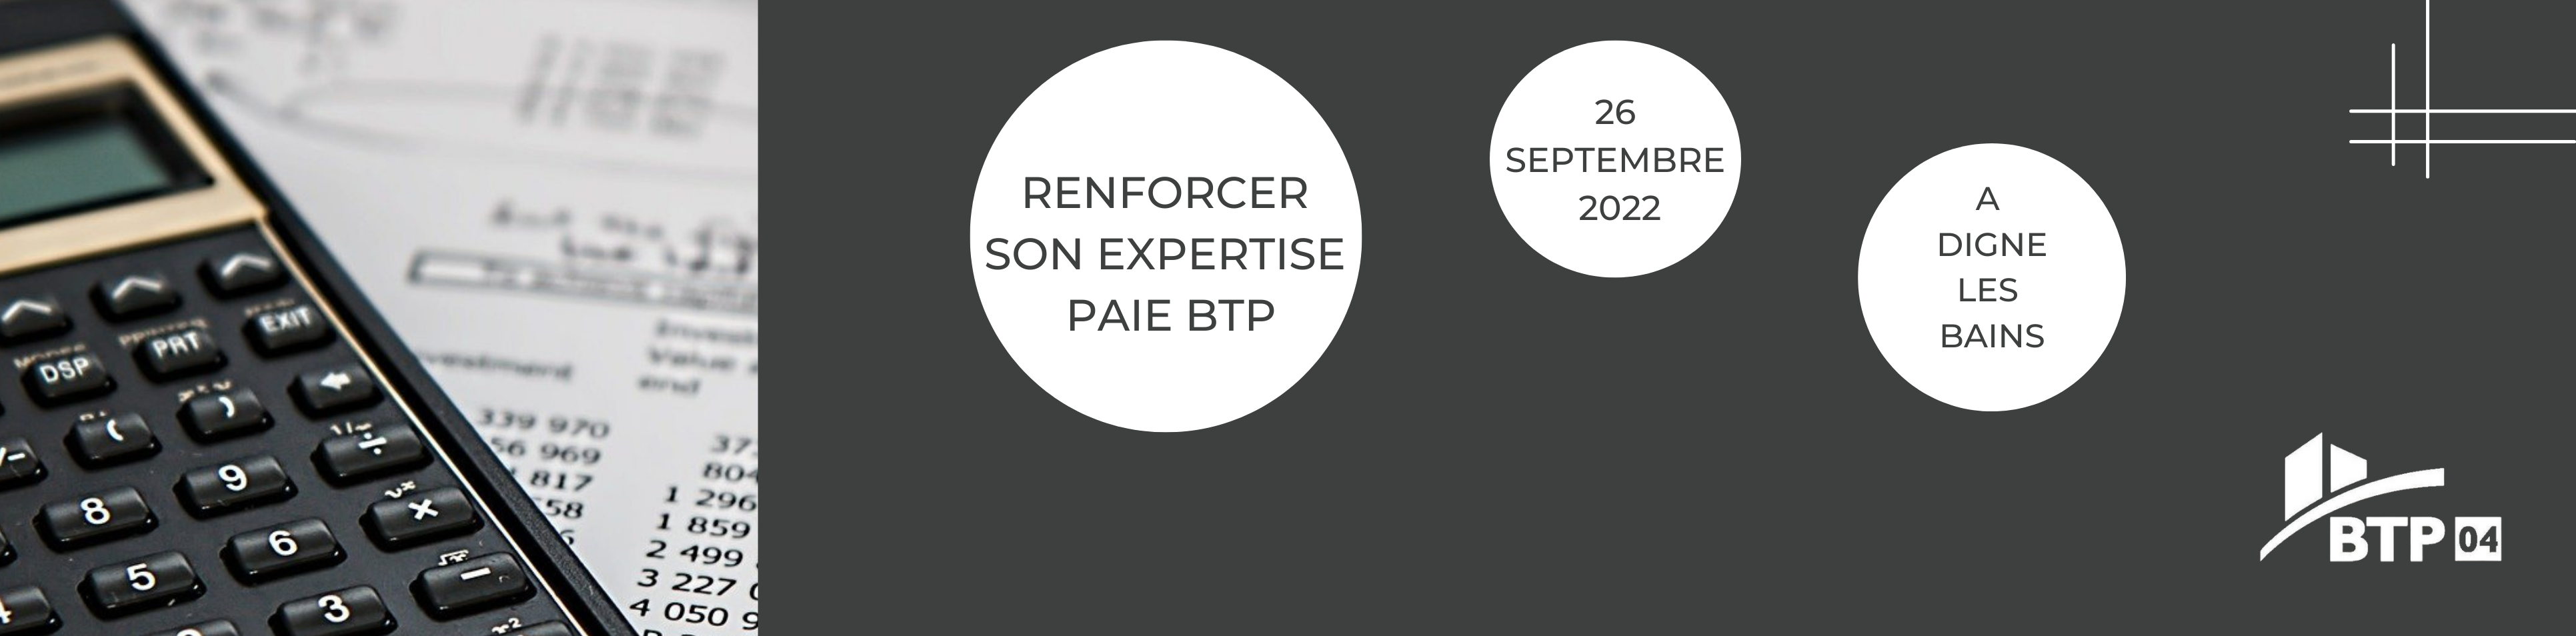 expertise-paie-btp-26-09-2022